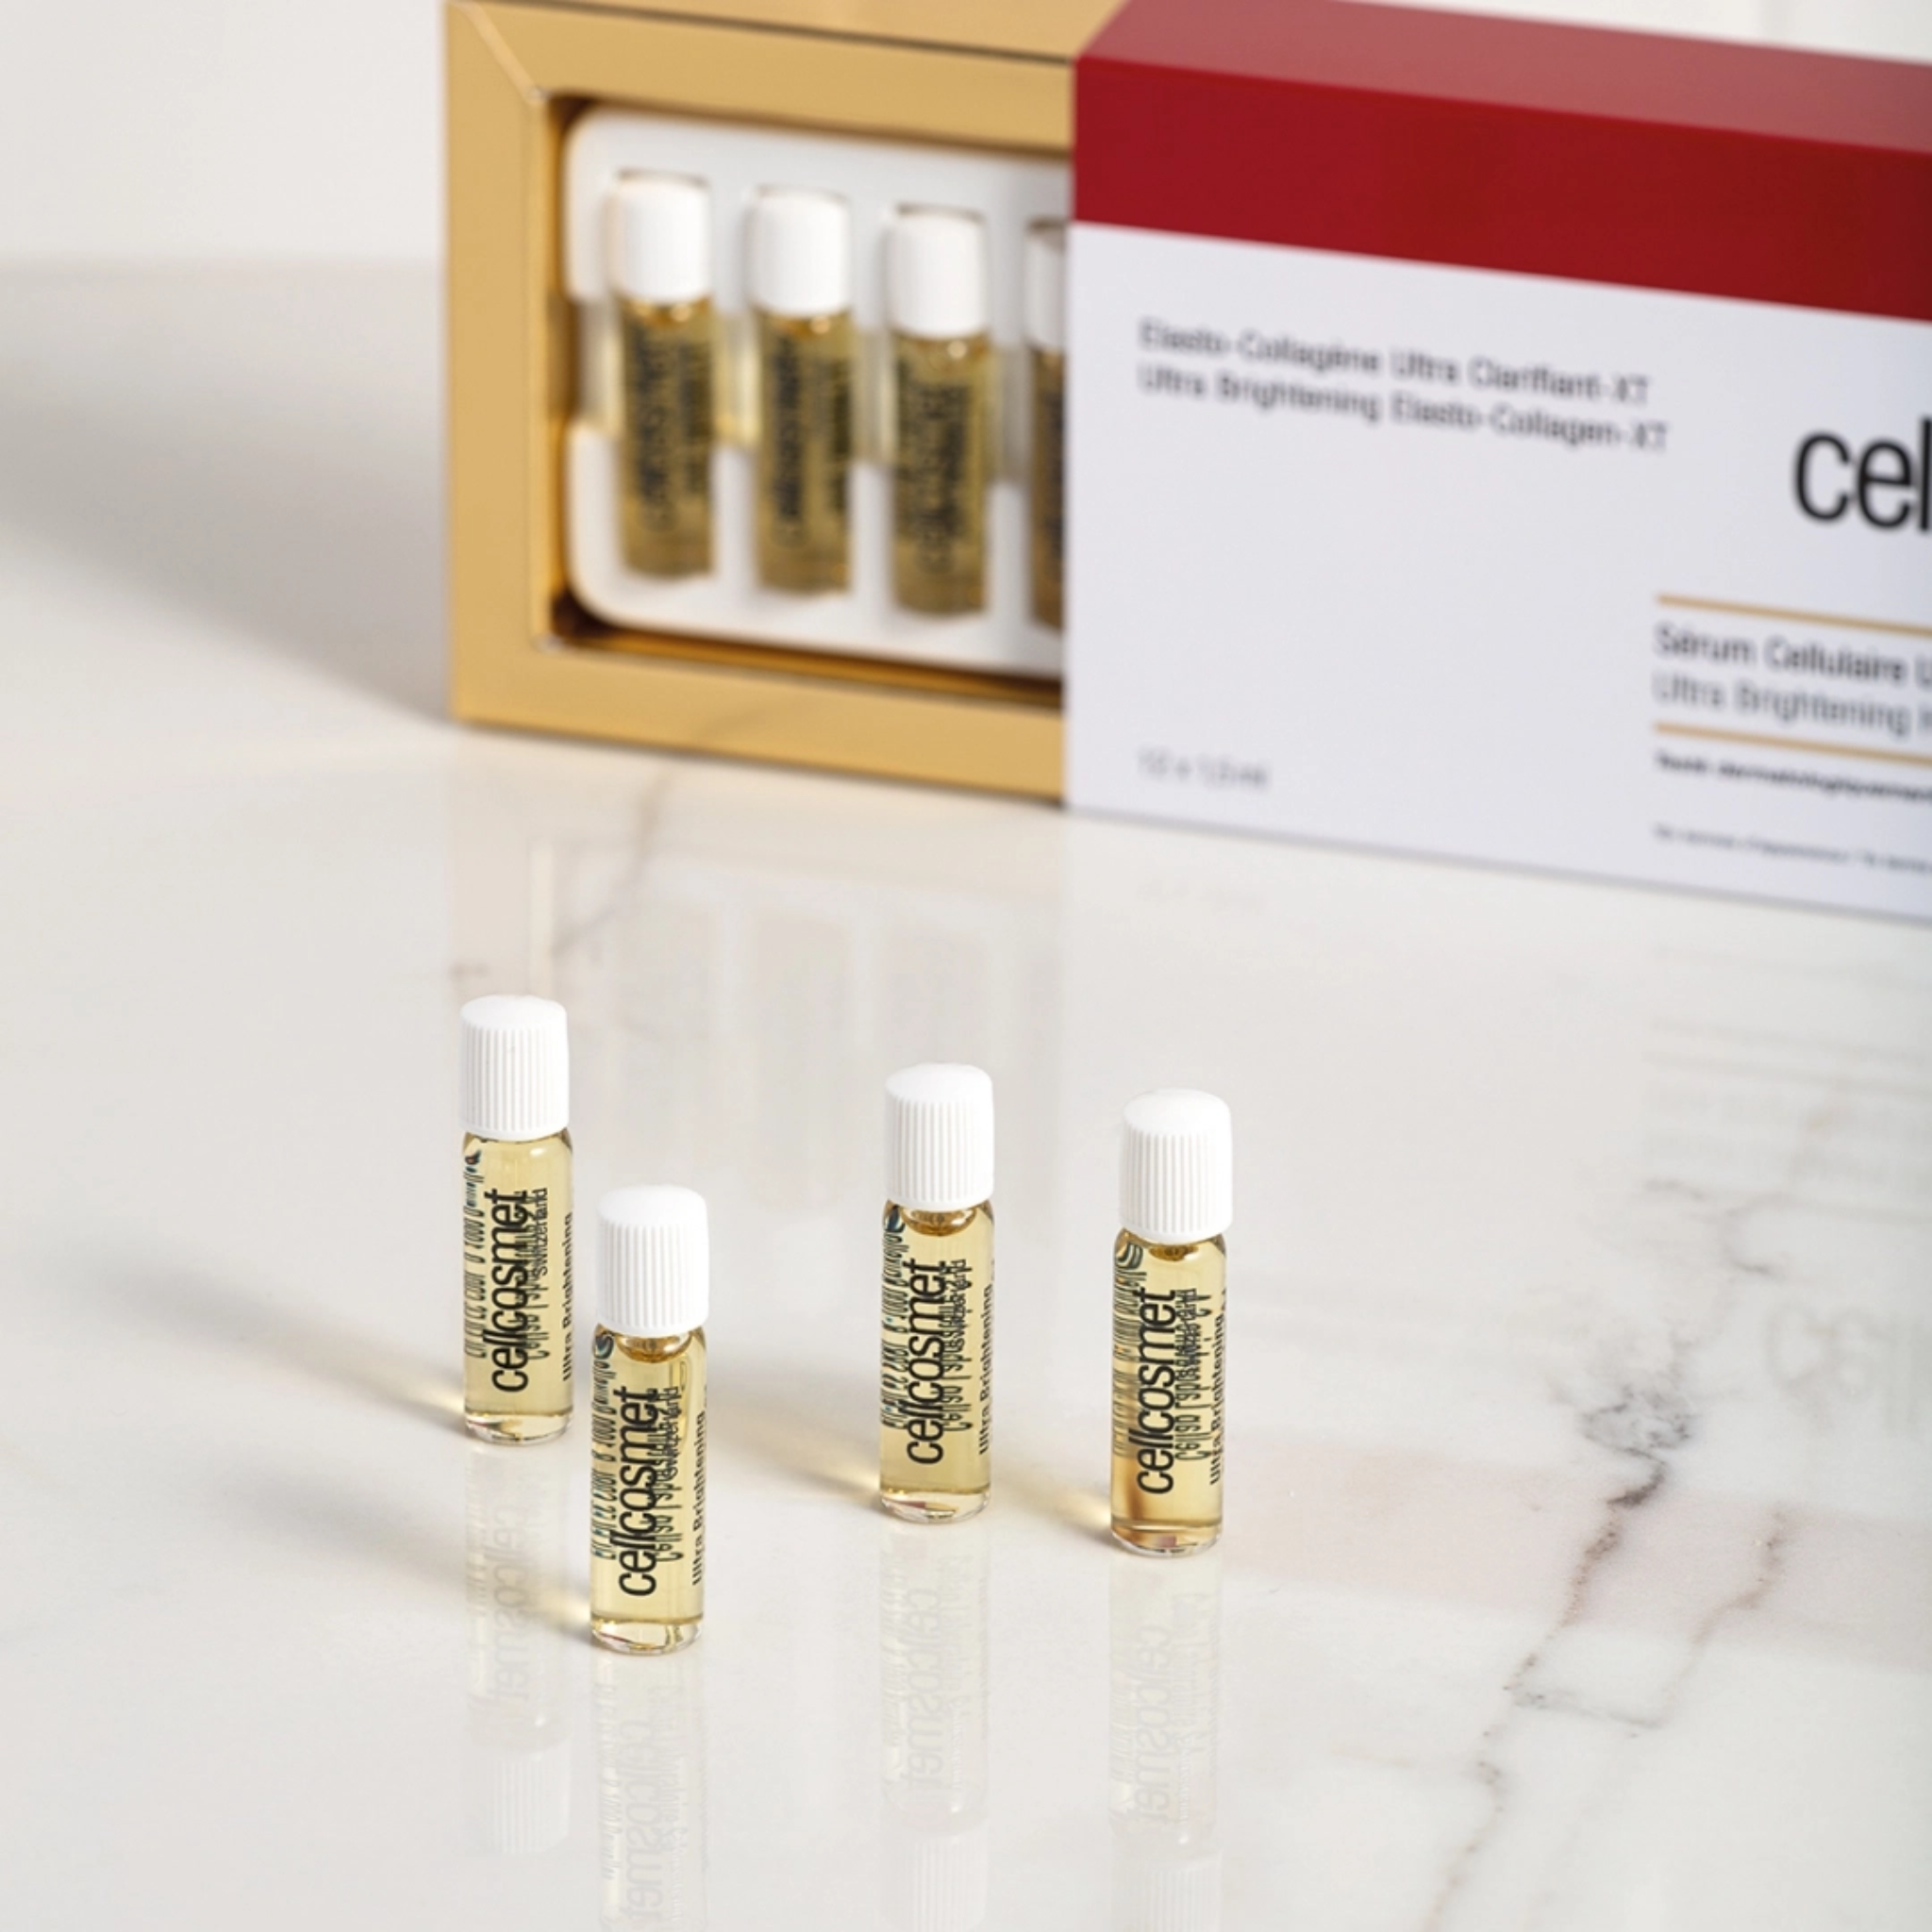 Ultra Brightening Elasto Collagen XT Hydra Refirming Cellular Serum